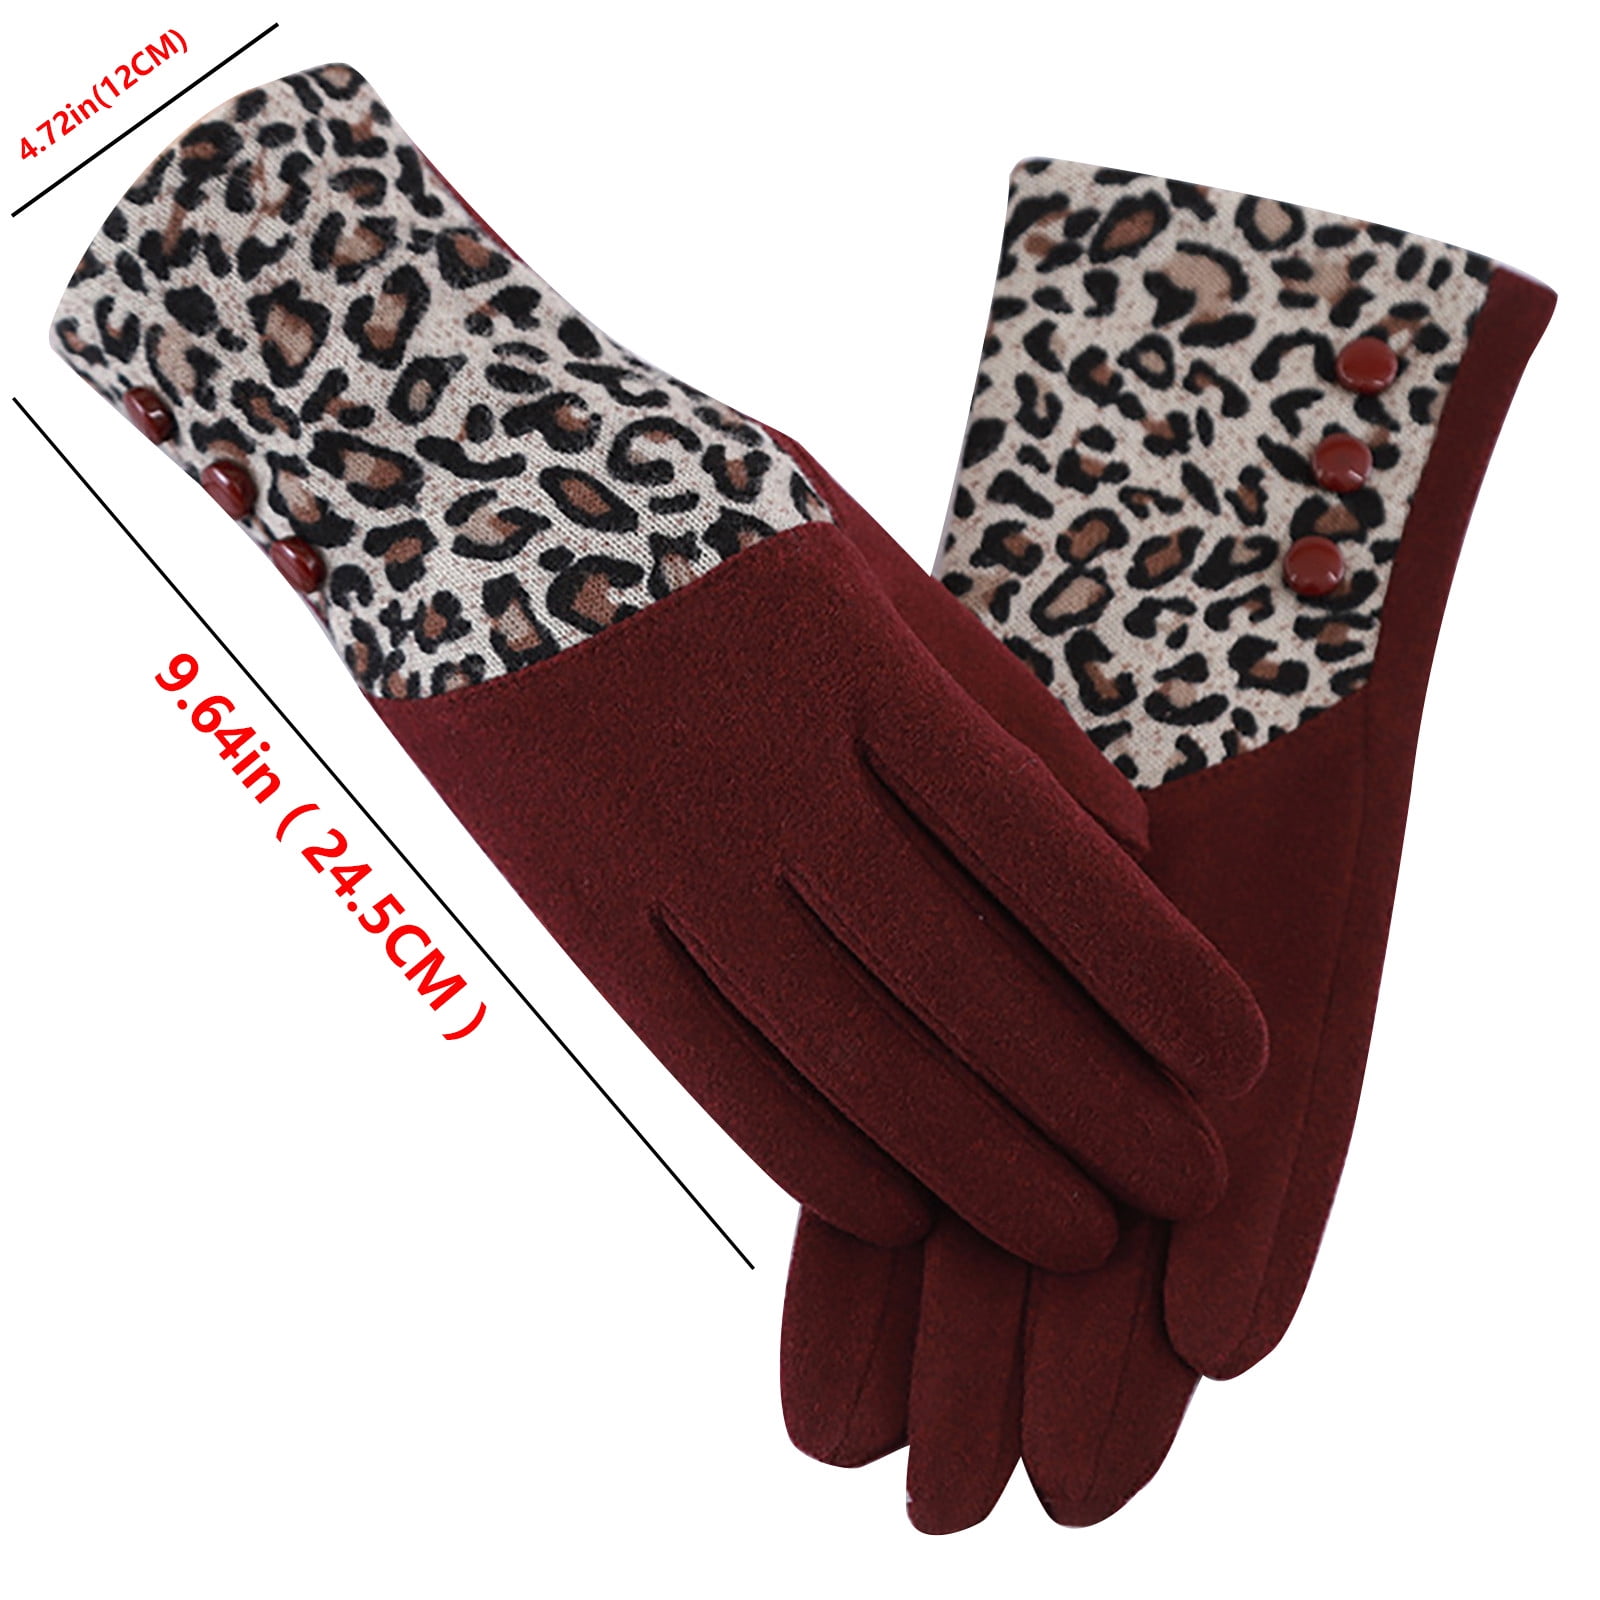 Rubber Grip Warm Winter Women's Knitted Gloves Leopard Print Graphic 